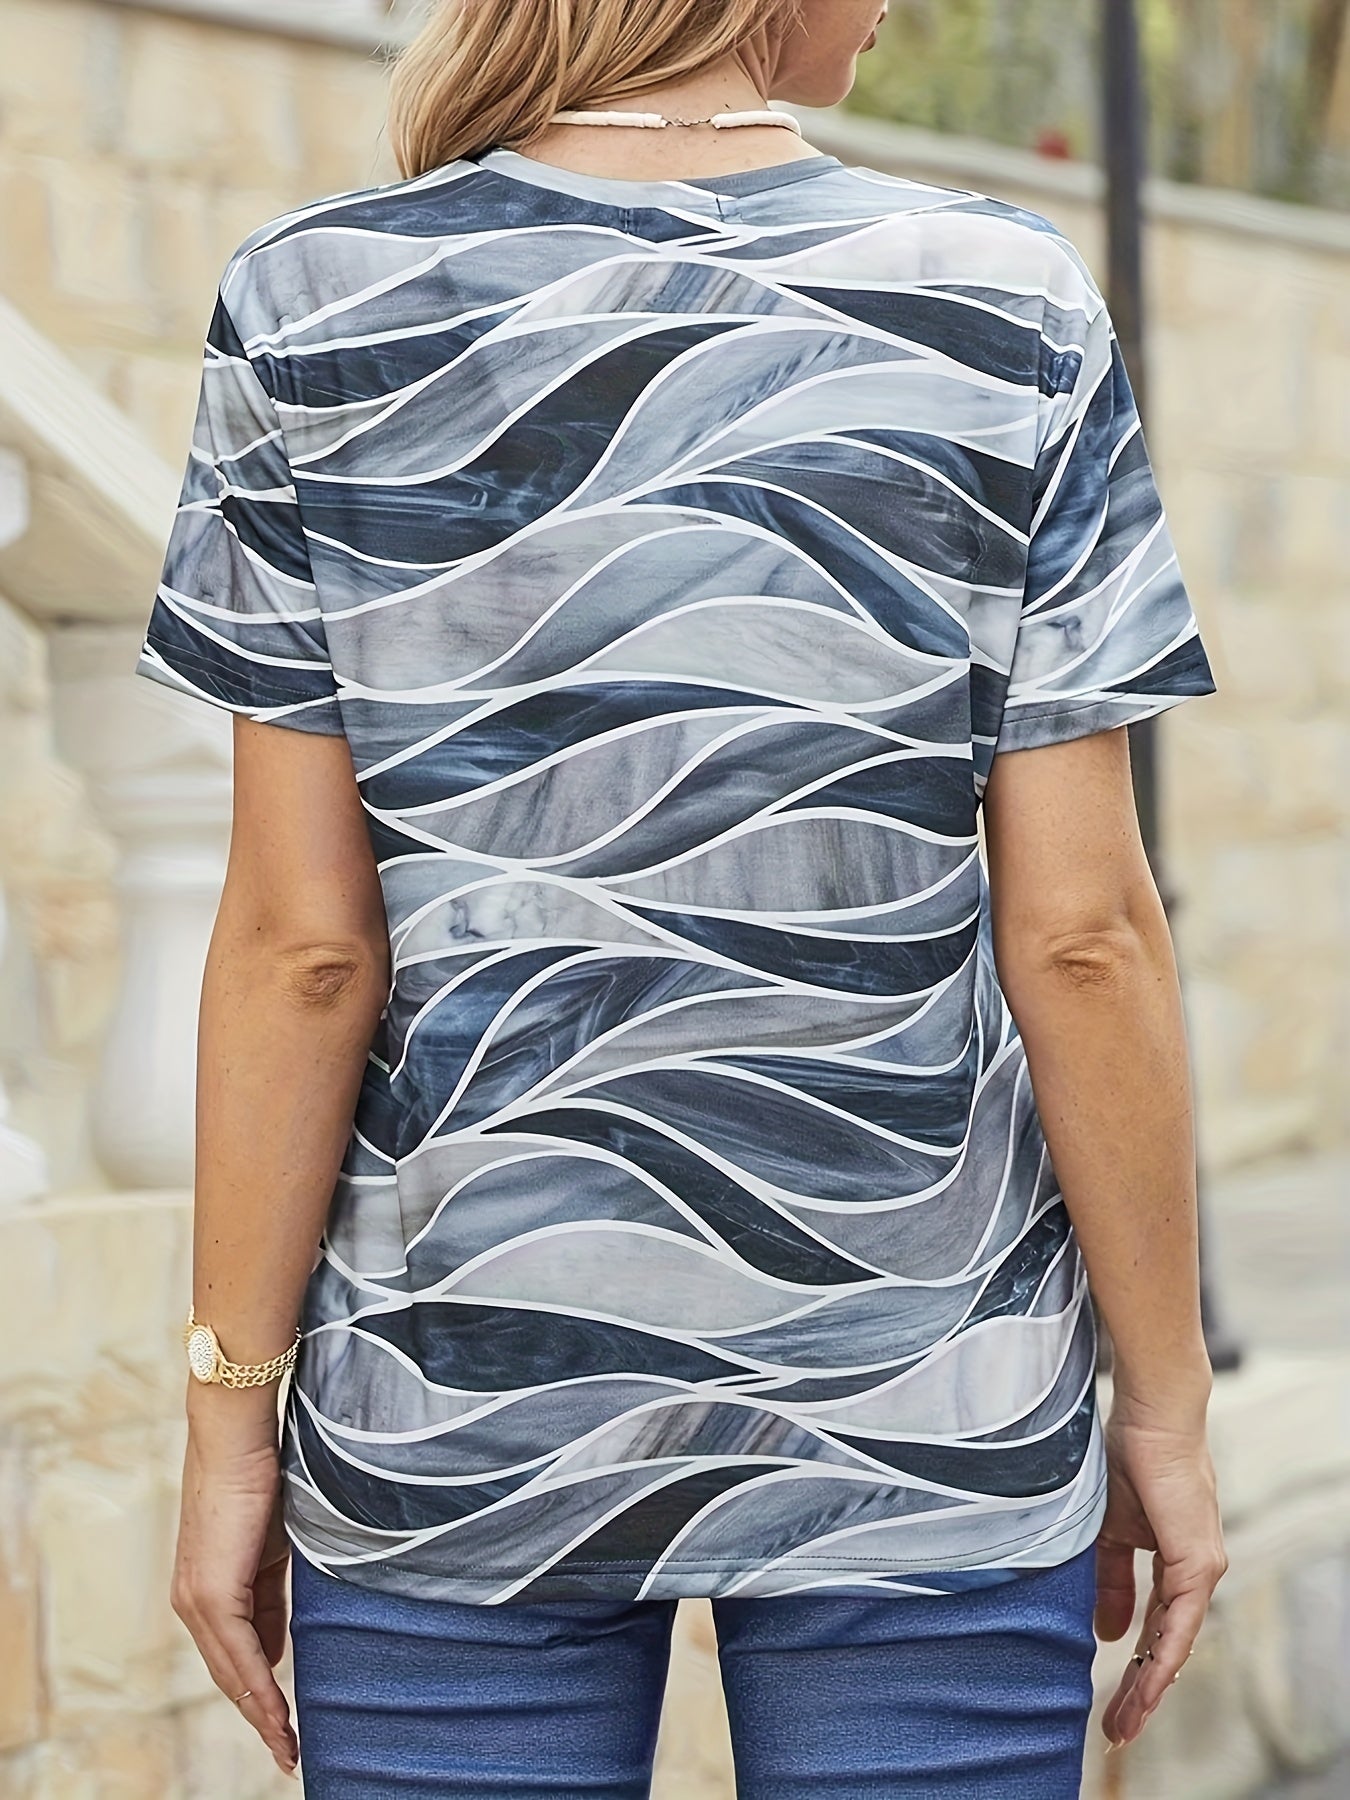 Romildi Women's Plus Size Colorblock Geometric Print T-Shirt - Comfortable and Stylish Short Sleeve Tee